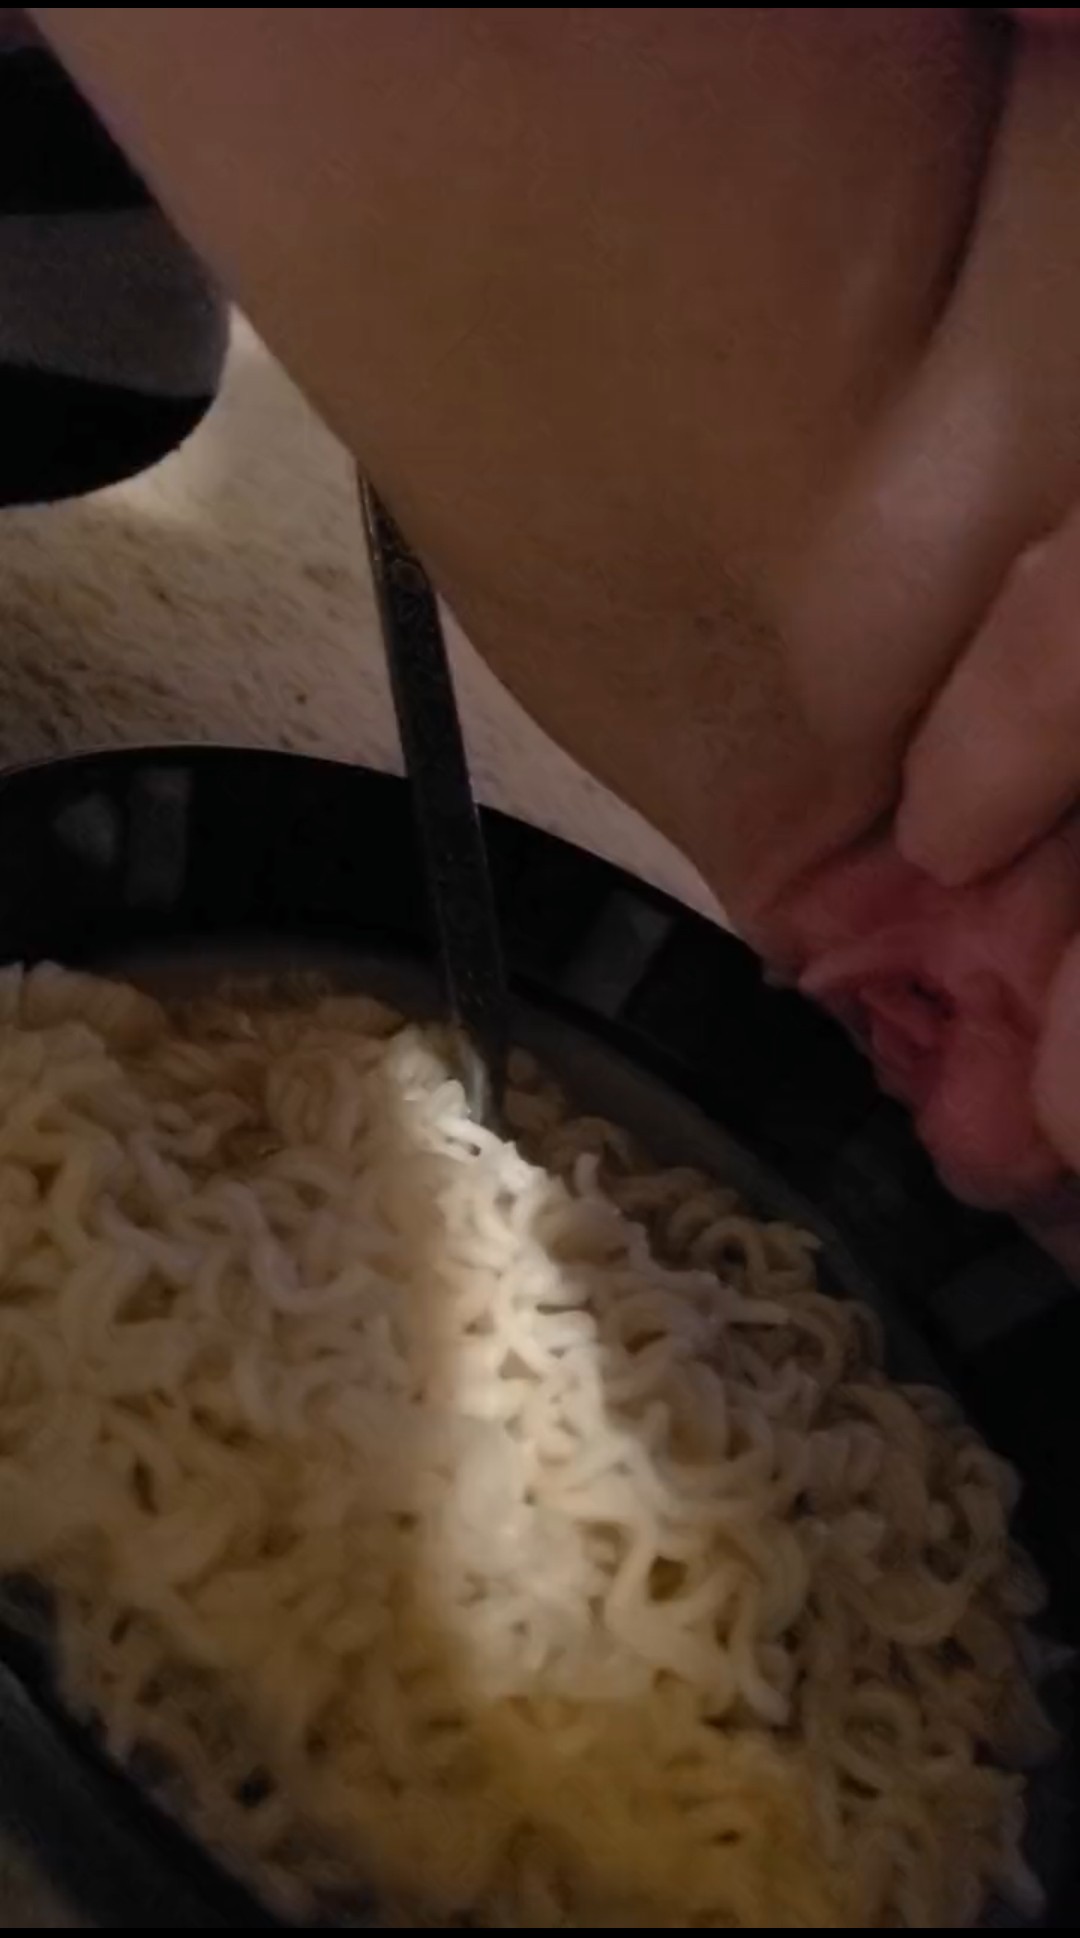 Girl peeing in noodles